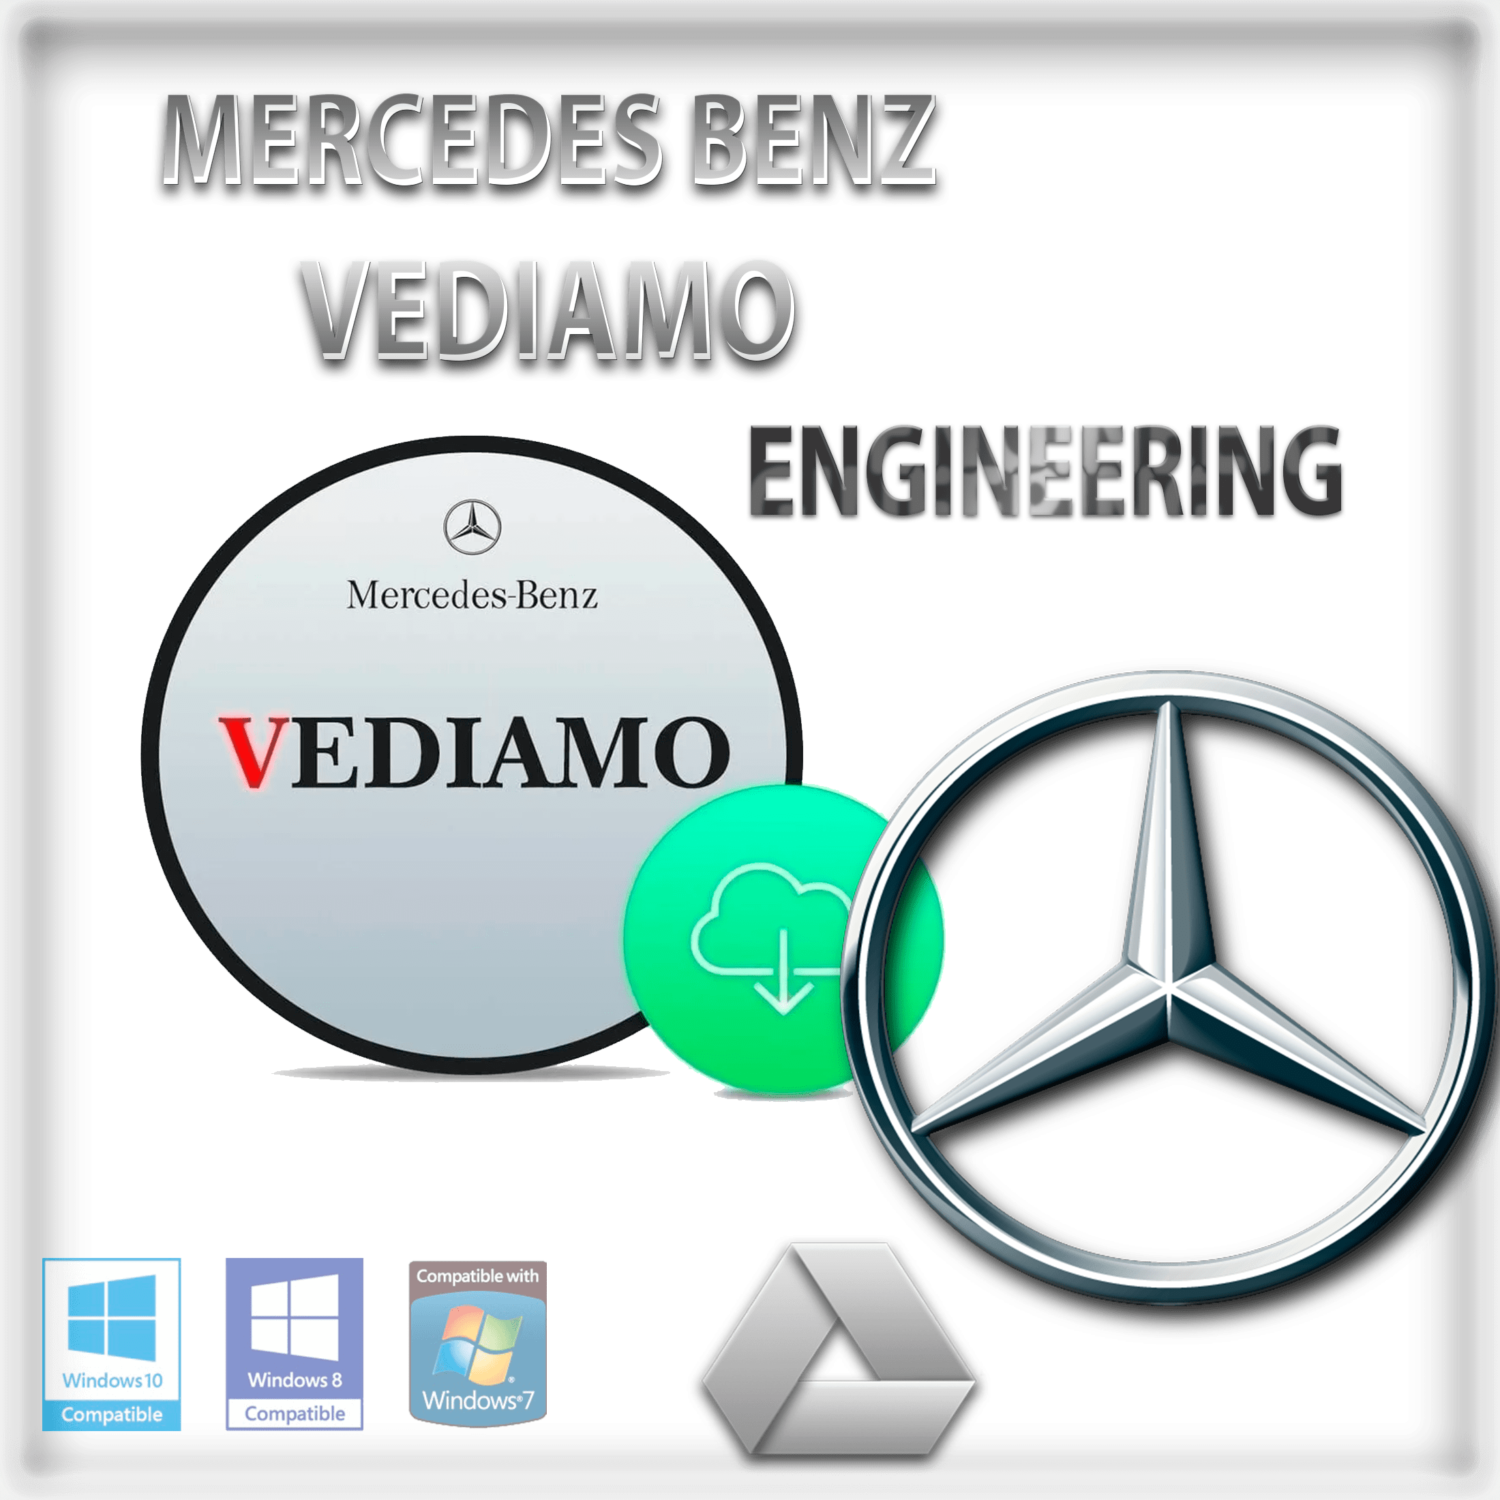 mercedes benz vediamo oficial 2019 5.1.1 diagnostic engineering software instant download